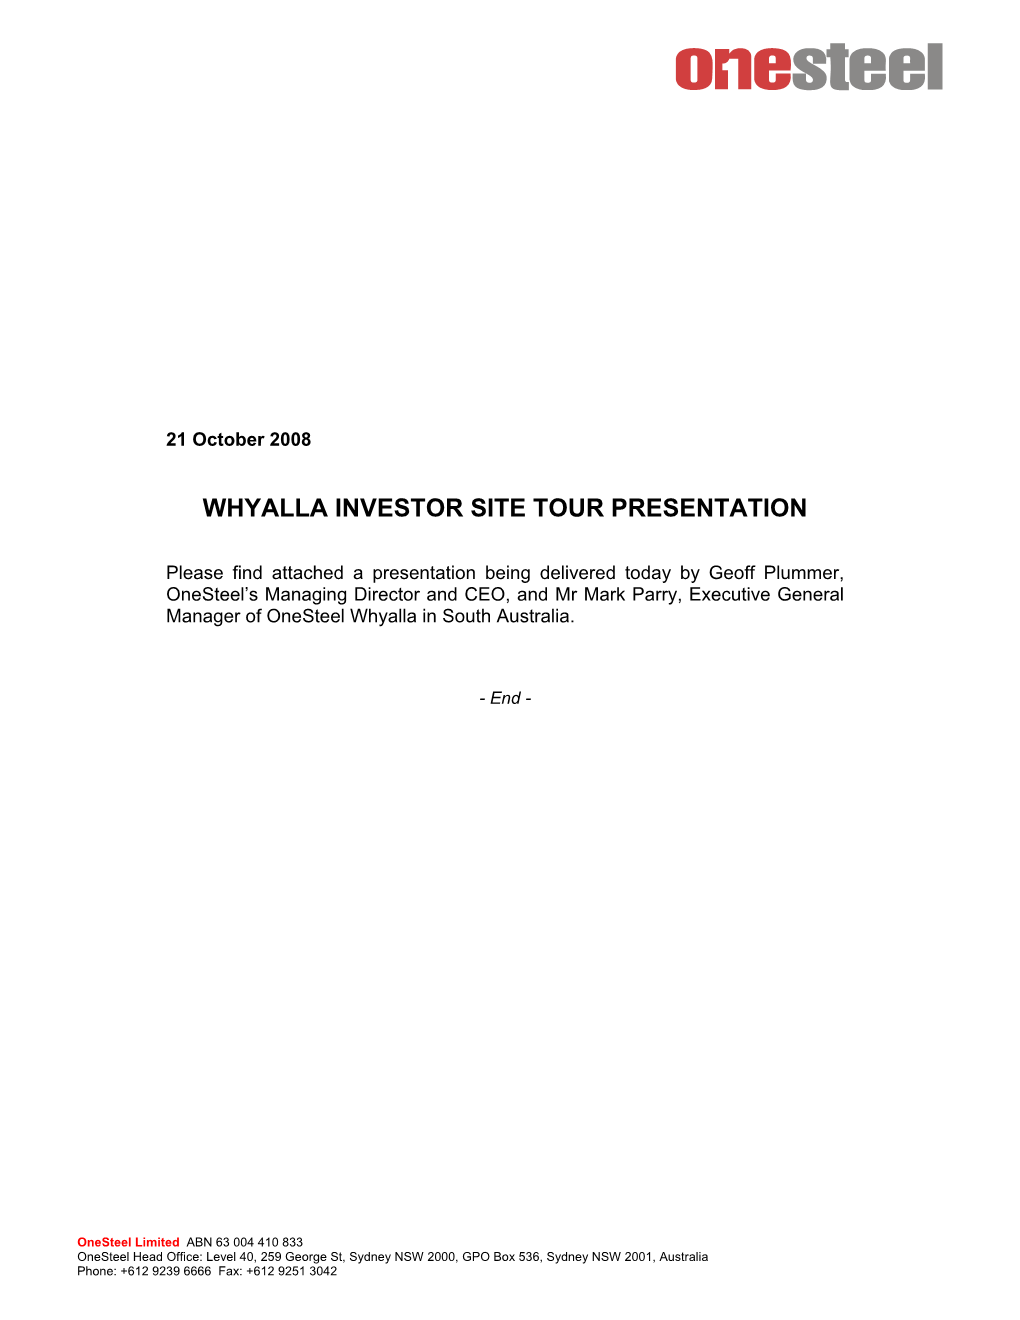 Whyalla Investor Site Tour Presentation